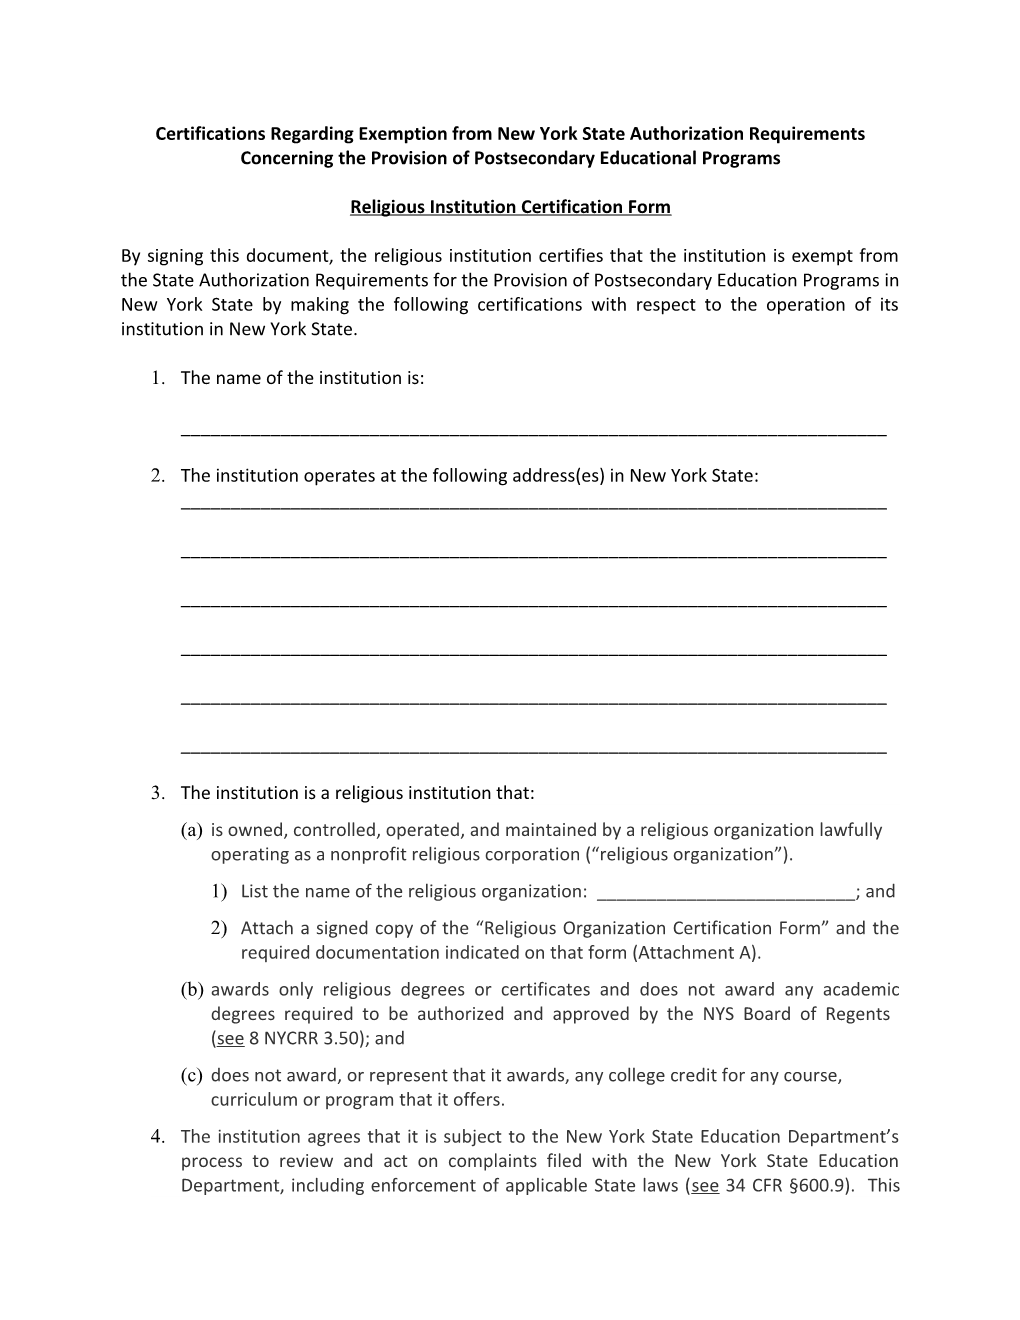 Religious Institution Certification Form